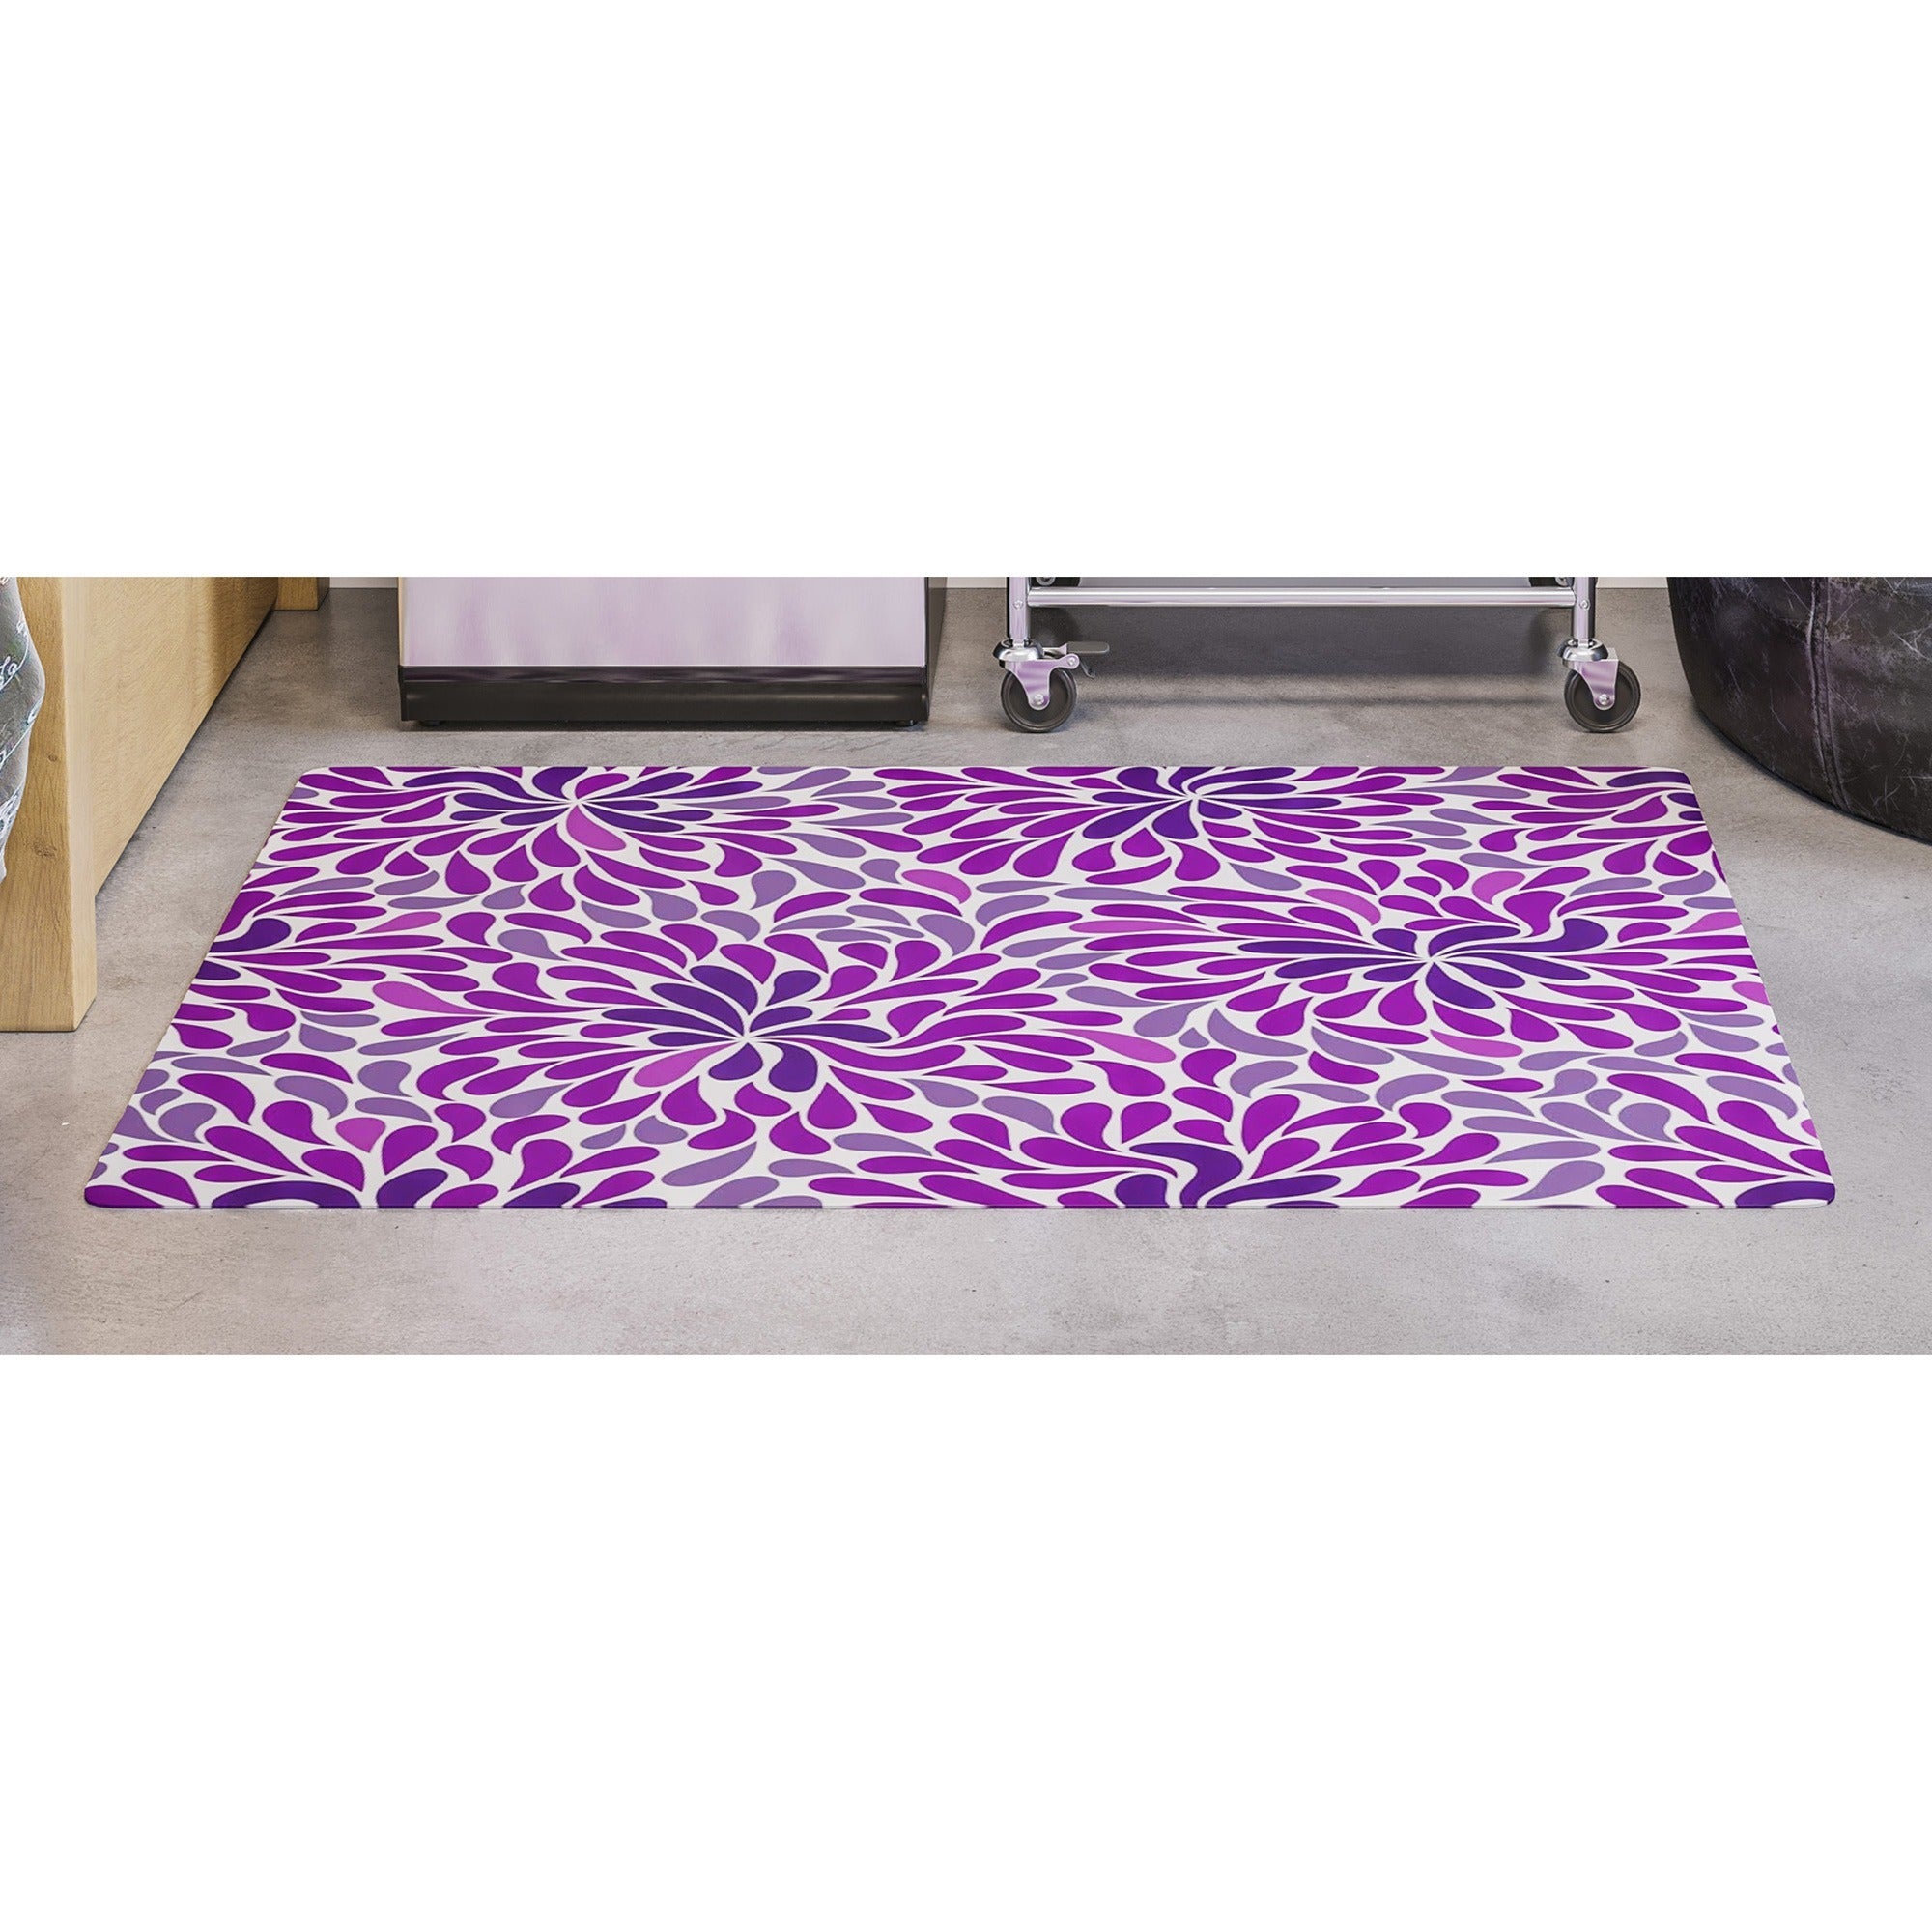 deflecto-fashionmat-purple-rain-chair-mat-home-office-classroom-hard-floor-pile-carpet-dorm-room-40-length-x-35-width-x-0050-thickness-rectangular-purple-rain-vinyl-multicolor-1-carton_defcm3540pr - 1